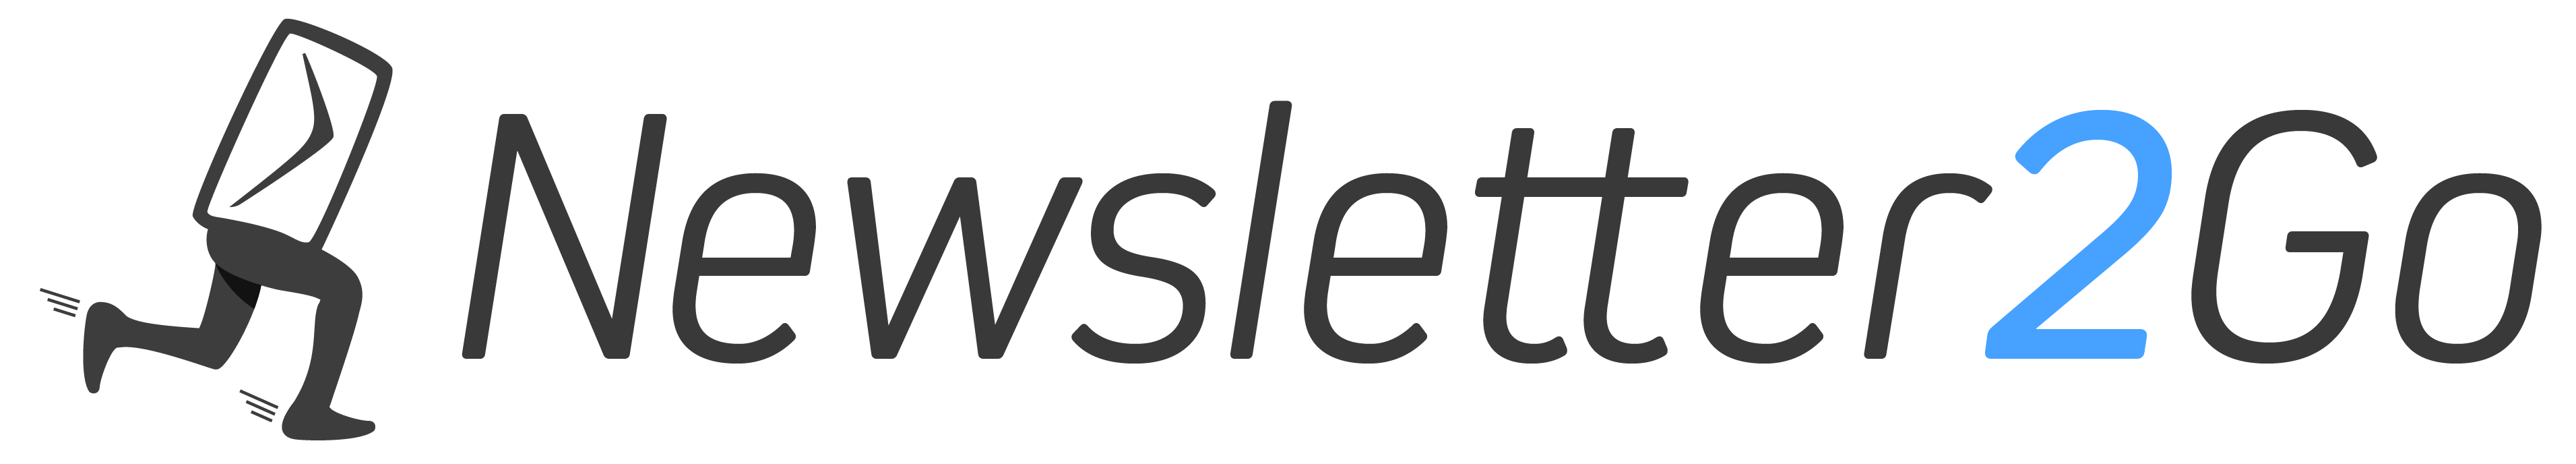 Newslettergo Logo Emailing Immobilier